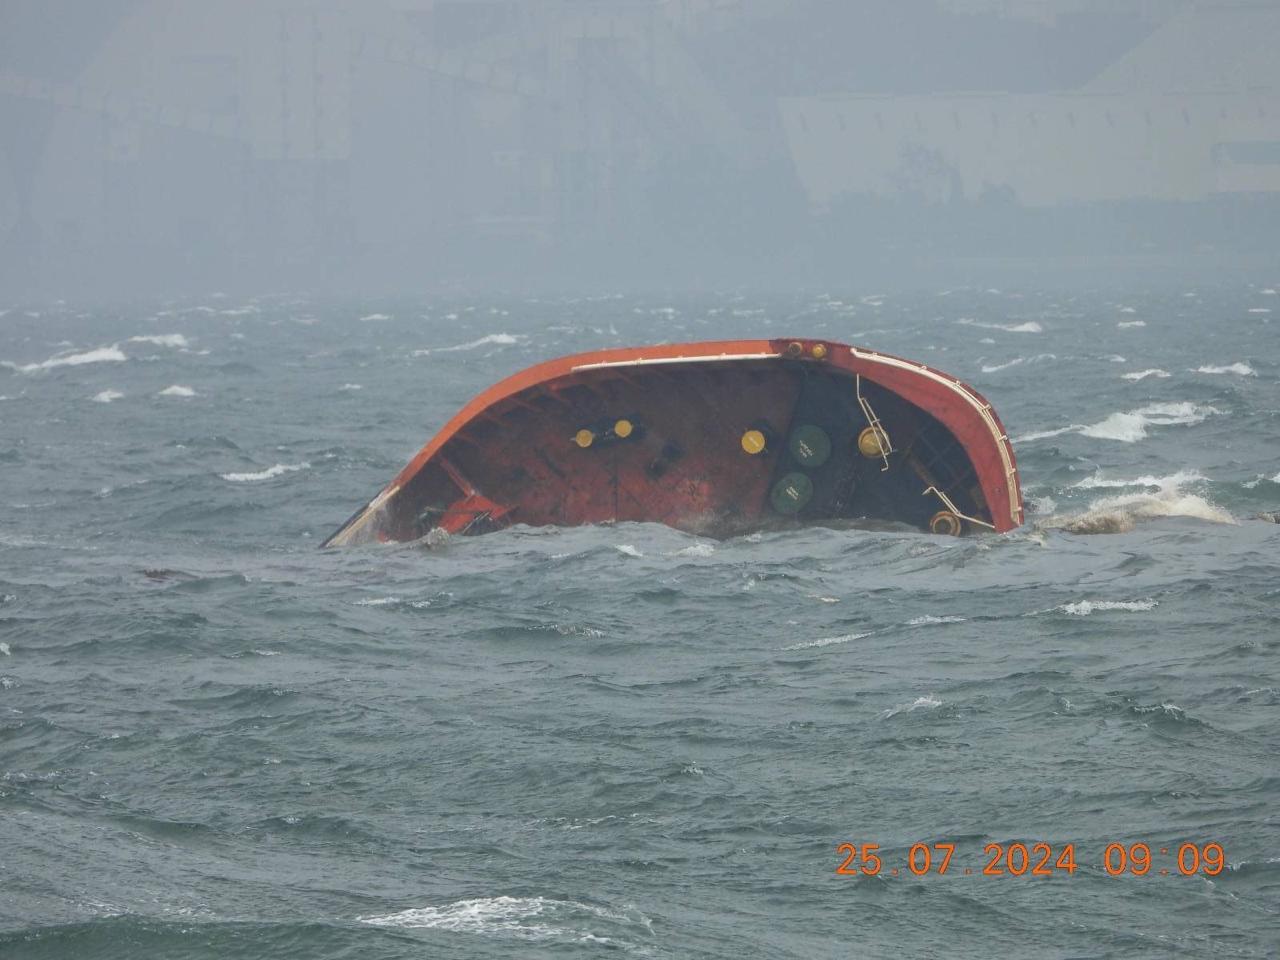 Oil spill from sunken tanker off Bataan may reach Manila shores – PCG